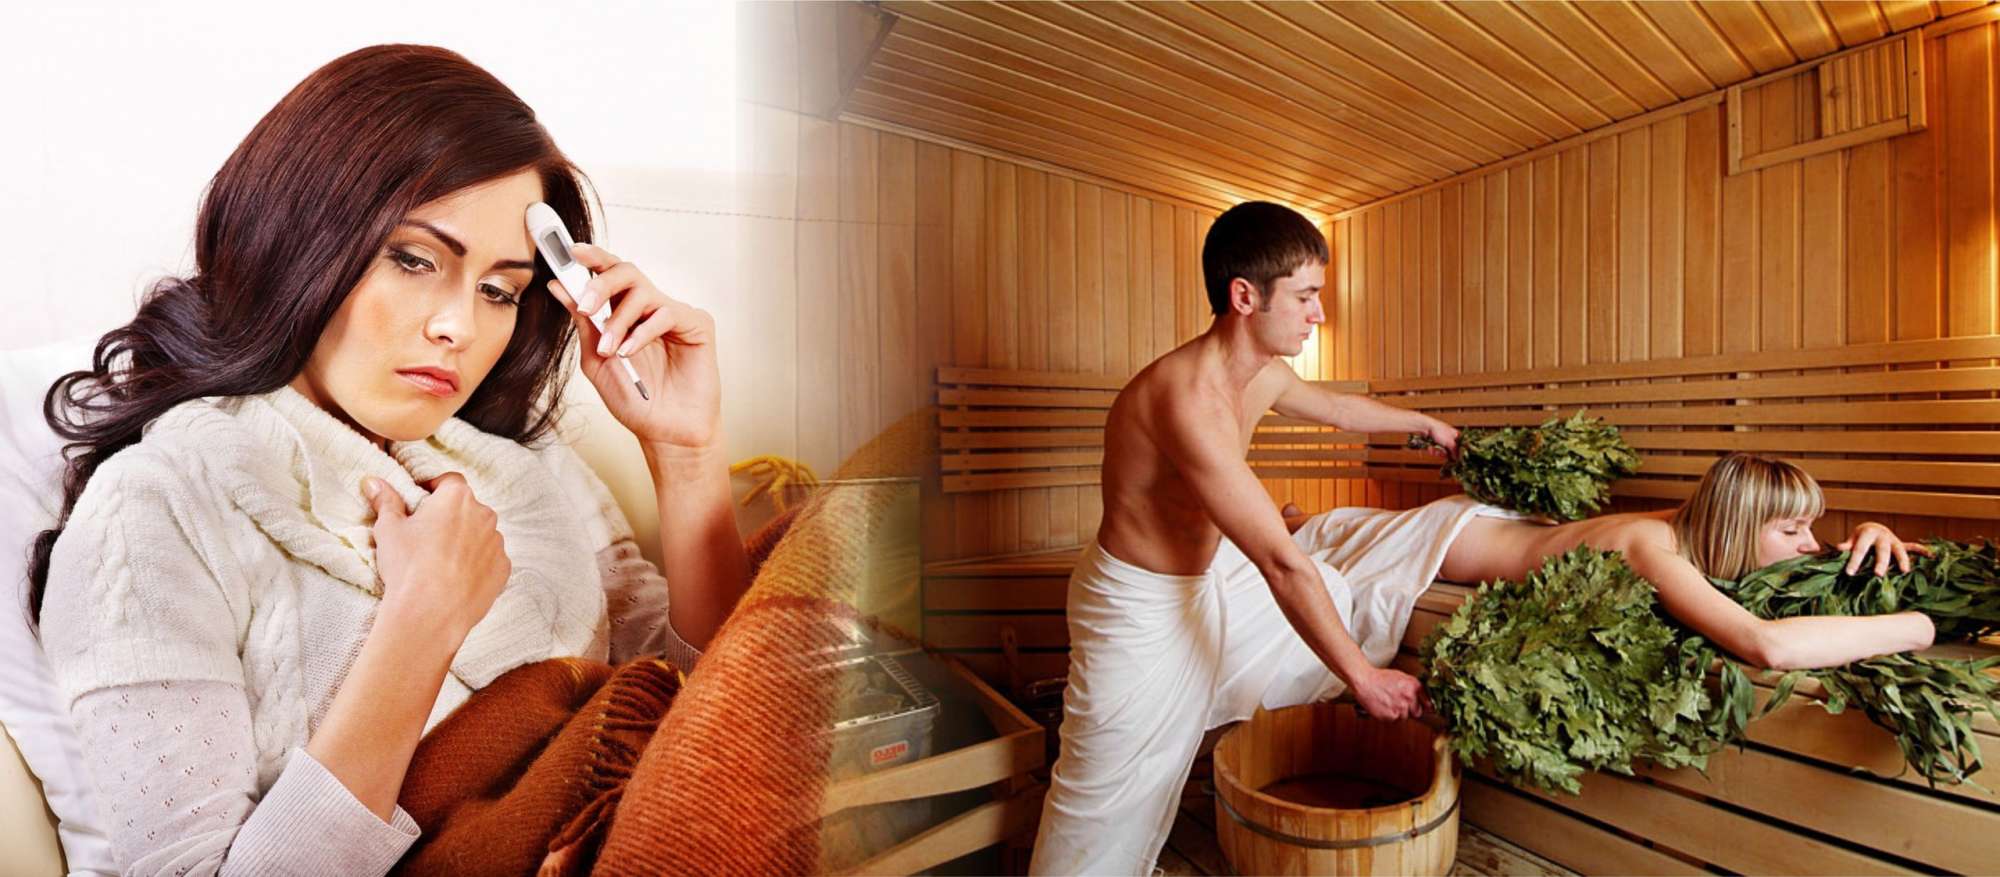 Mixed Sauna Bathing